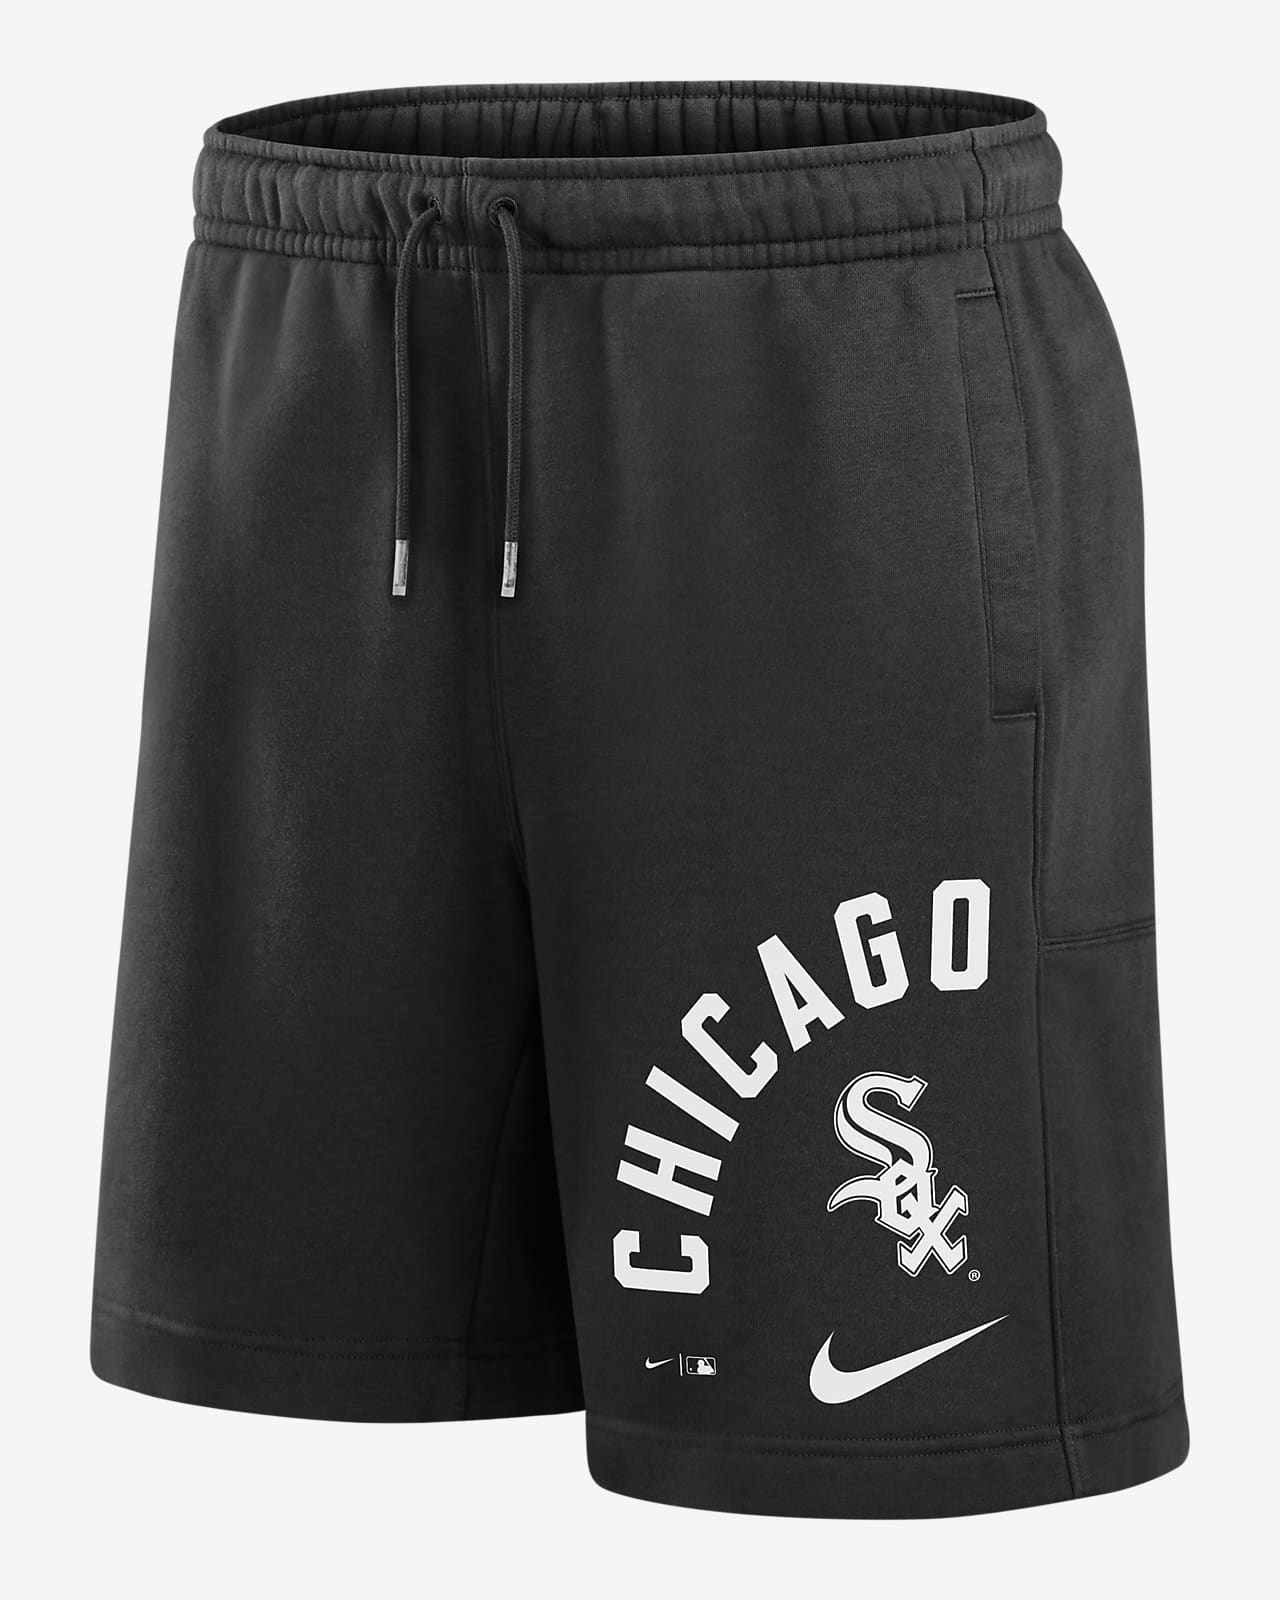 Chicago White Sox Arched Kicker Men's Nike MLB Shorts